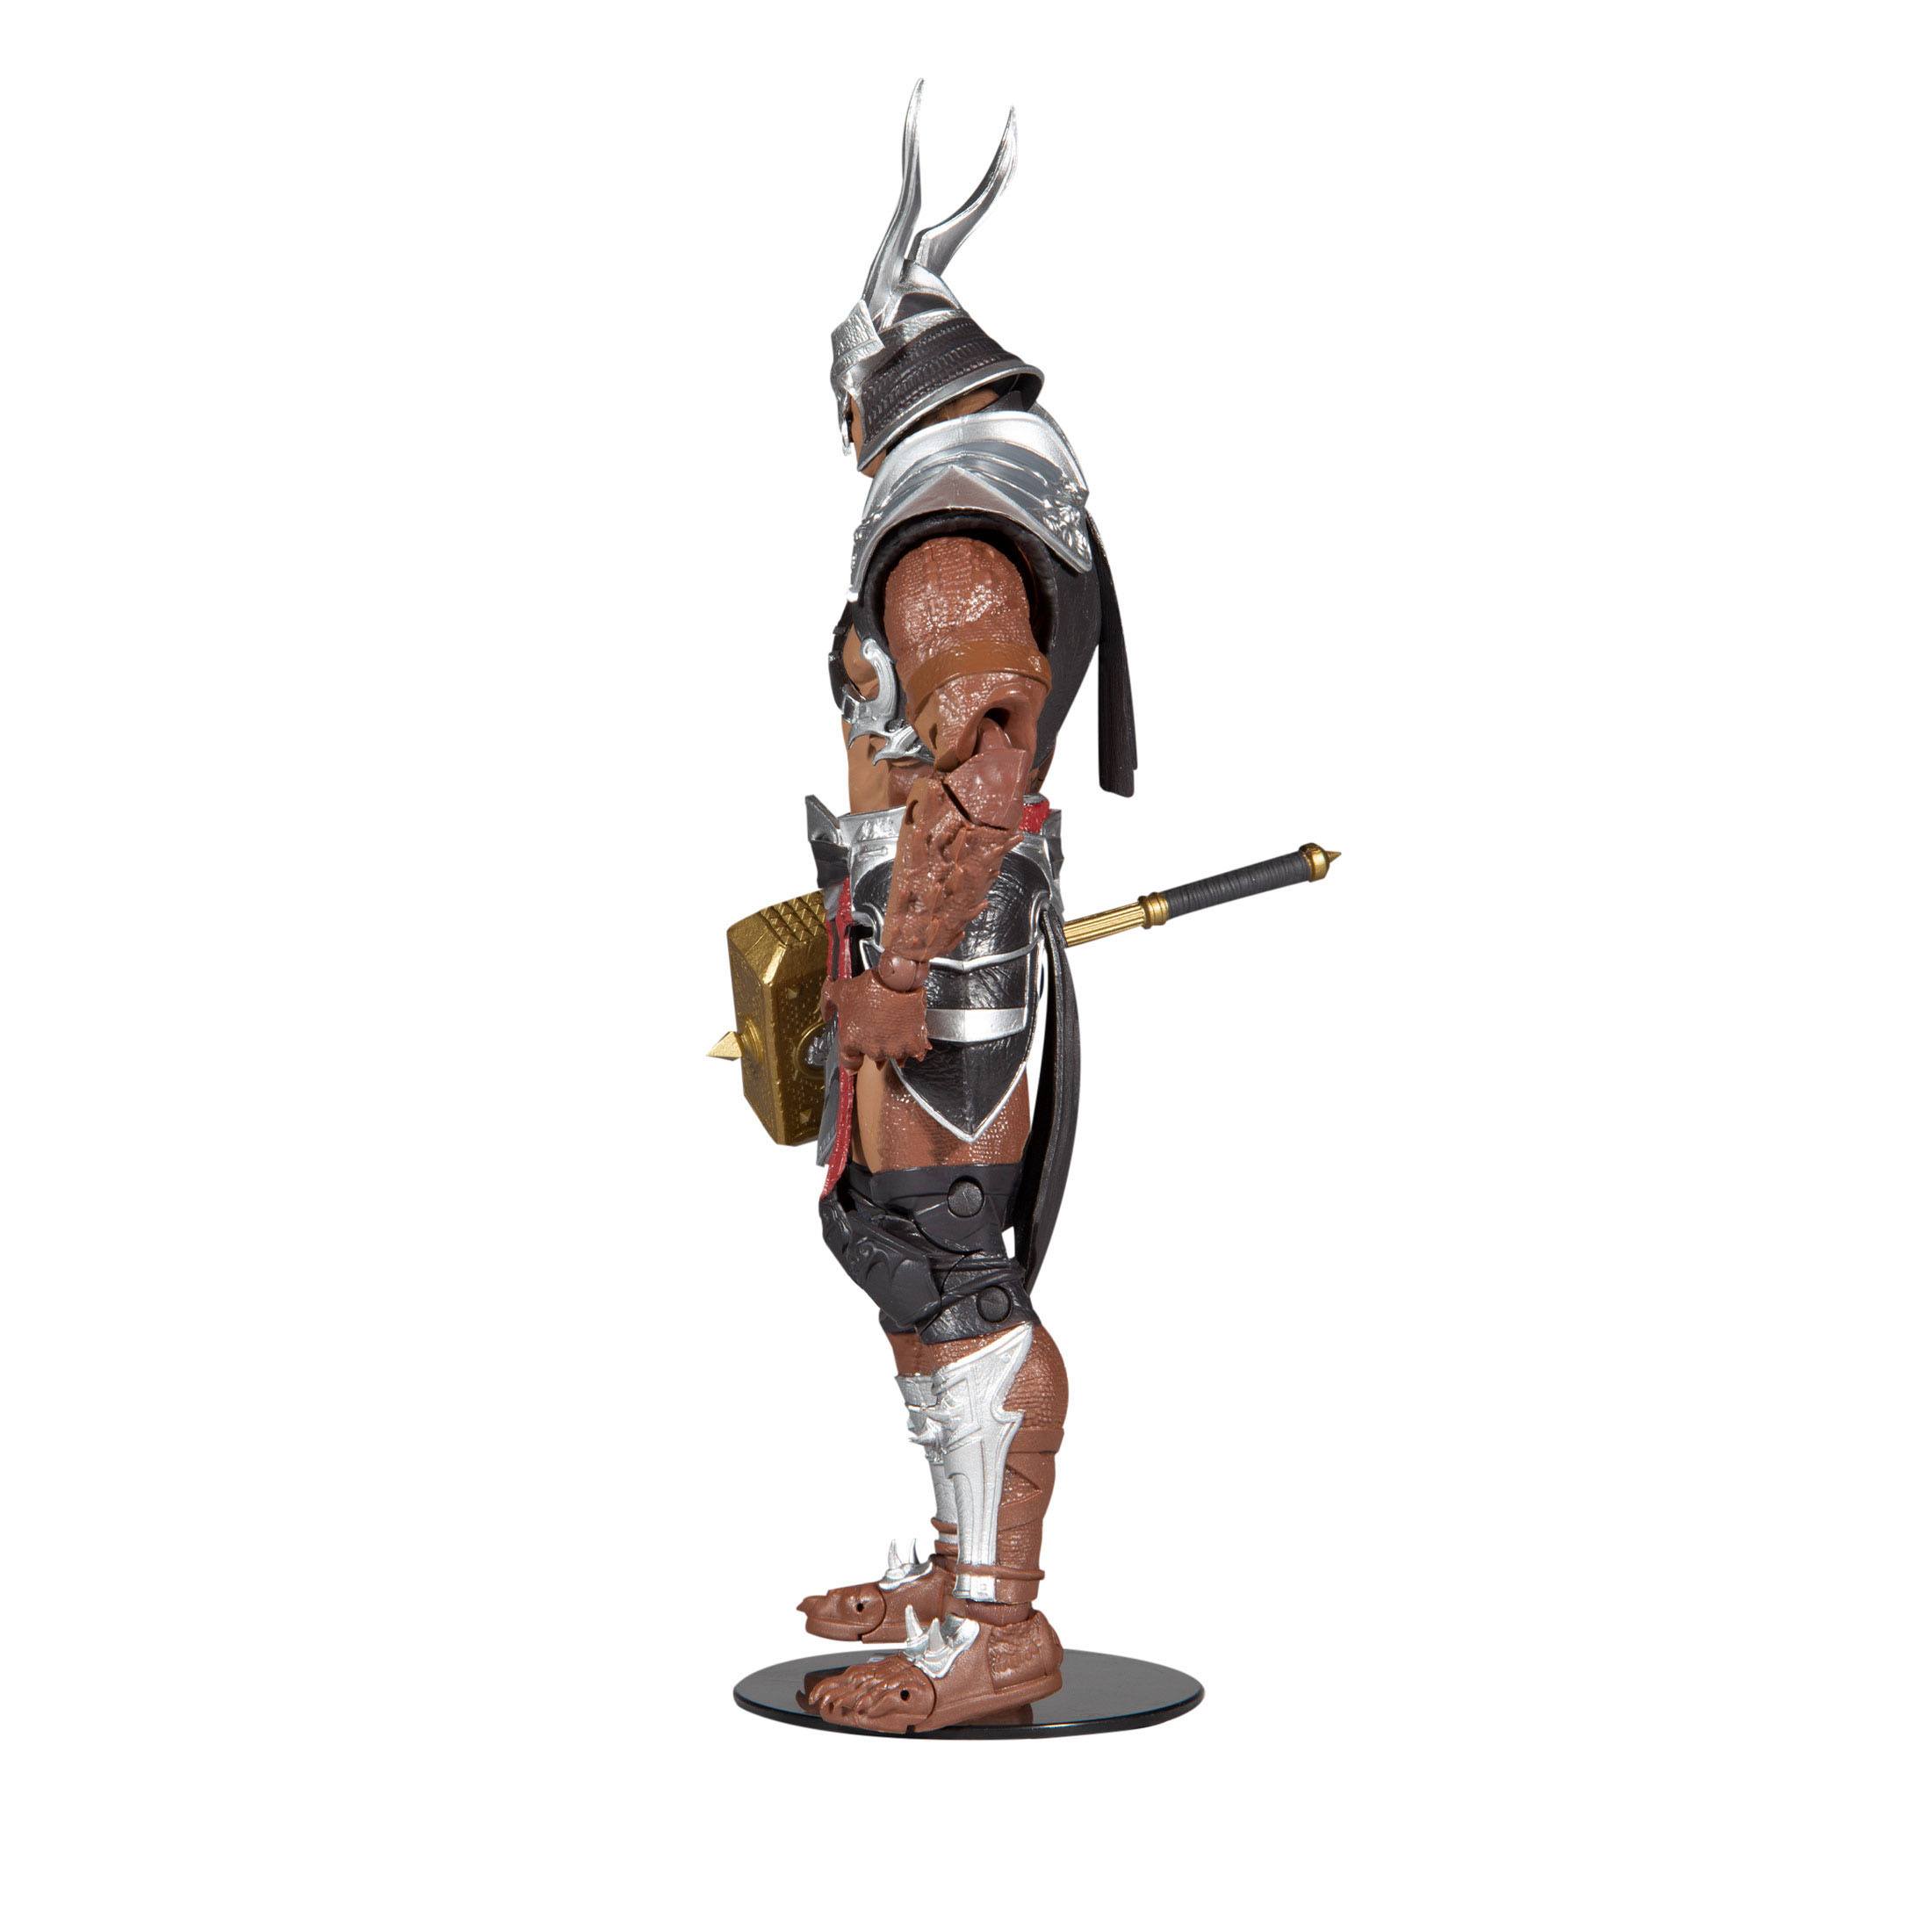 Mortal Kombat Actionfigur Shao Kahn (Platinum Kahn) 18 cm MCF11048 787926110487